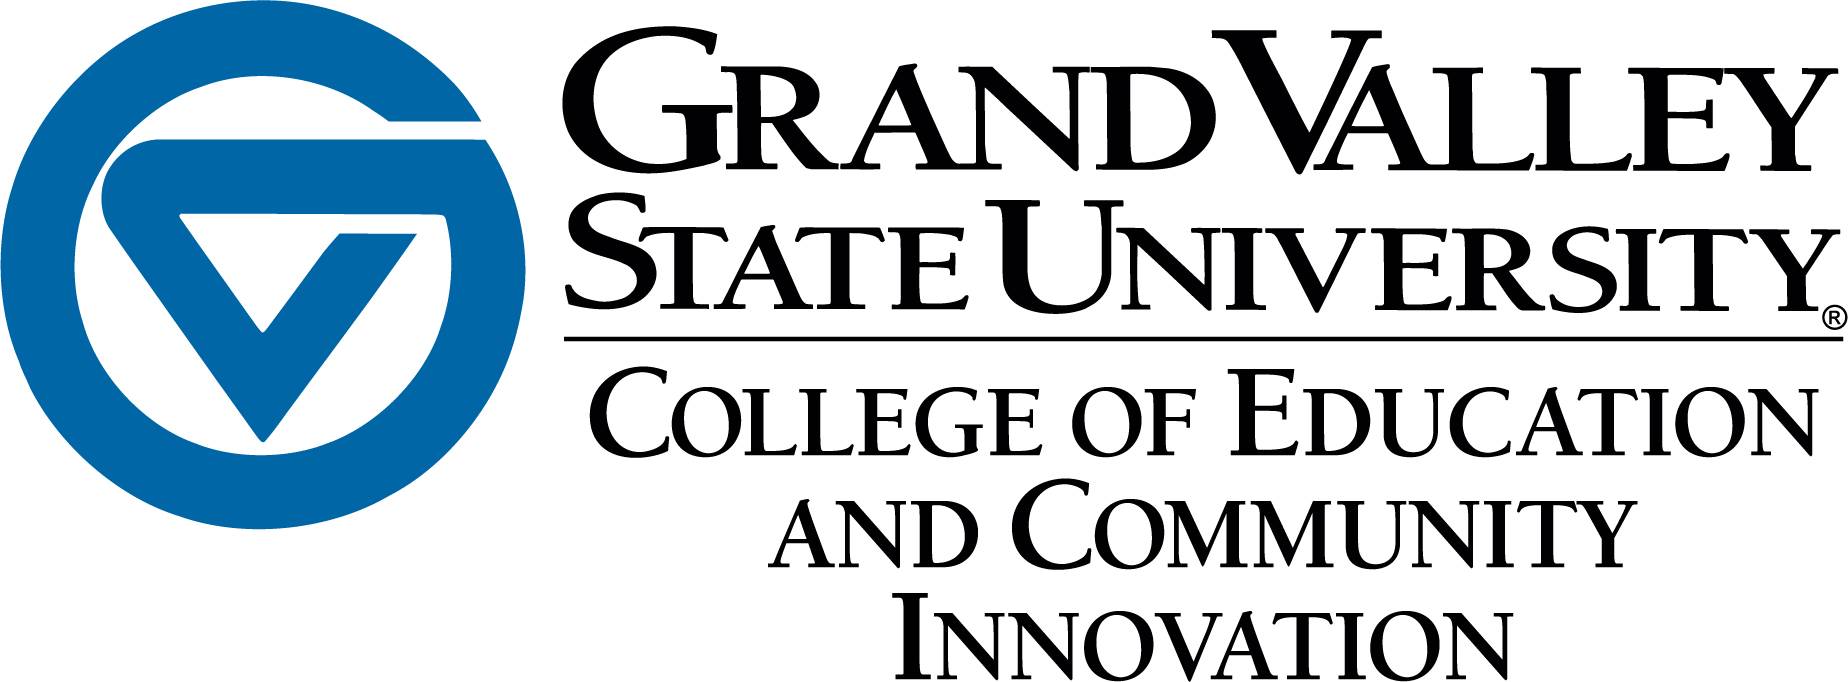 College of Education & Community Innovation Logo